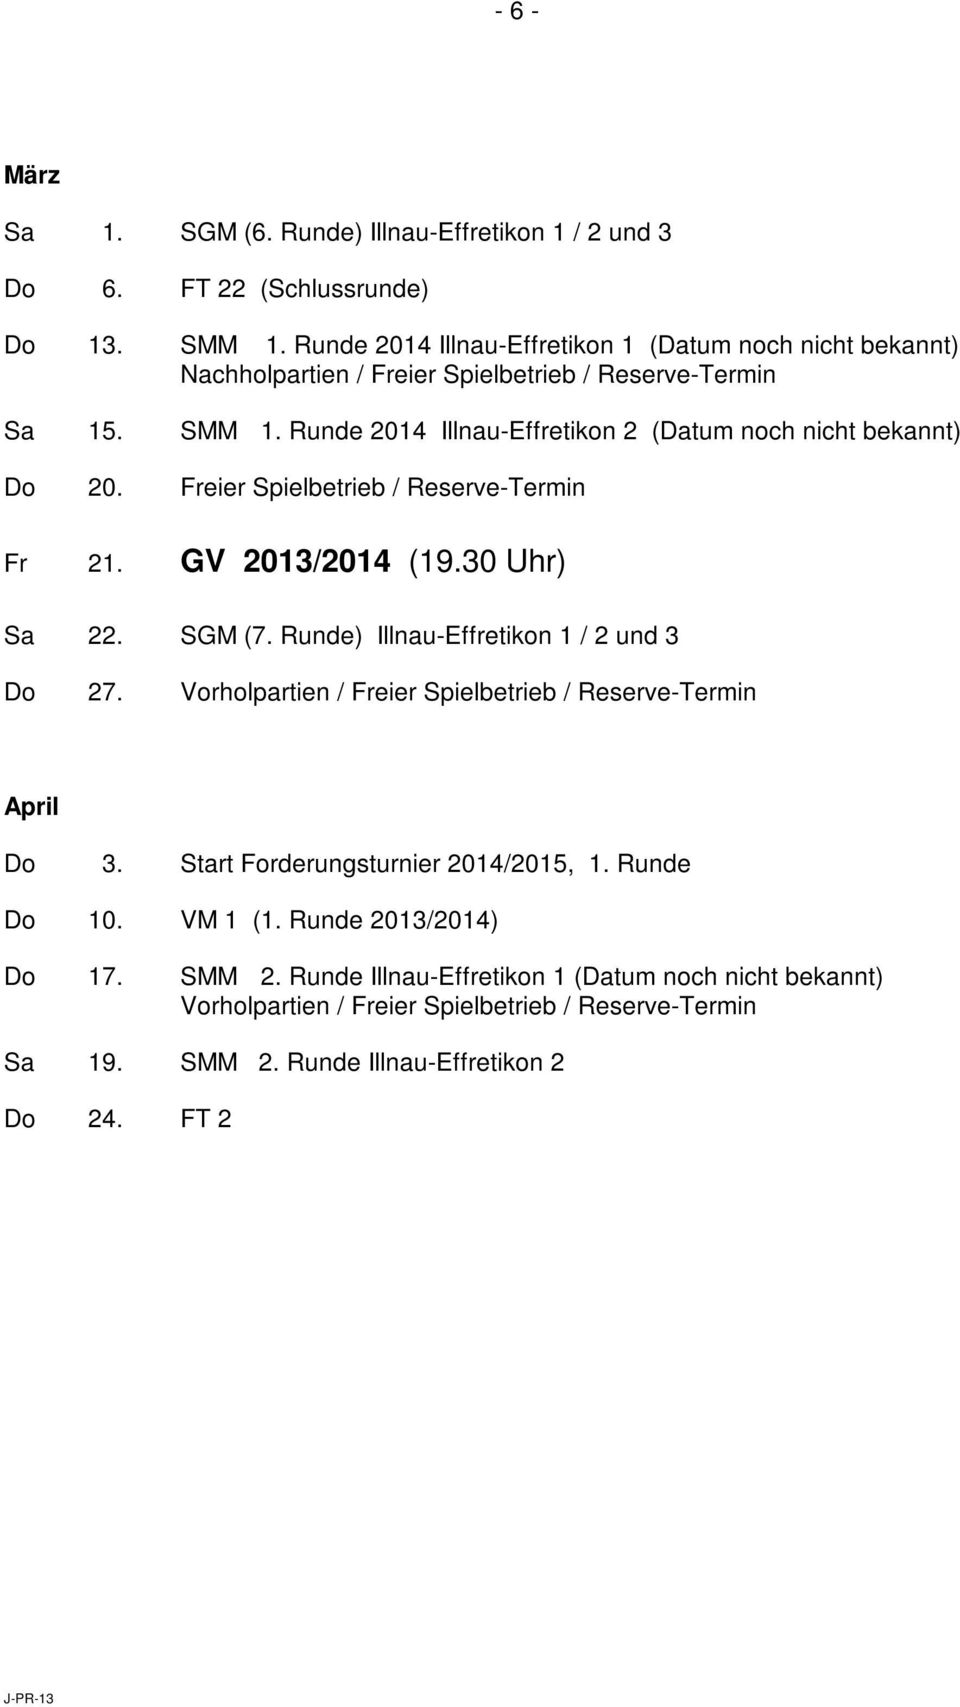 Runde 2014 Illnau-Effretikon 2 (Datum noch nicht bekannt) Do 20. Freier Spielbetrieb / Reserve-Termin Fr 21. GV 2013/2014 (19.30 Uhr) Sa 22. SGM (7.